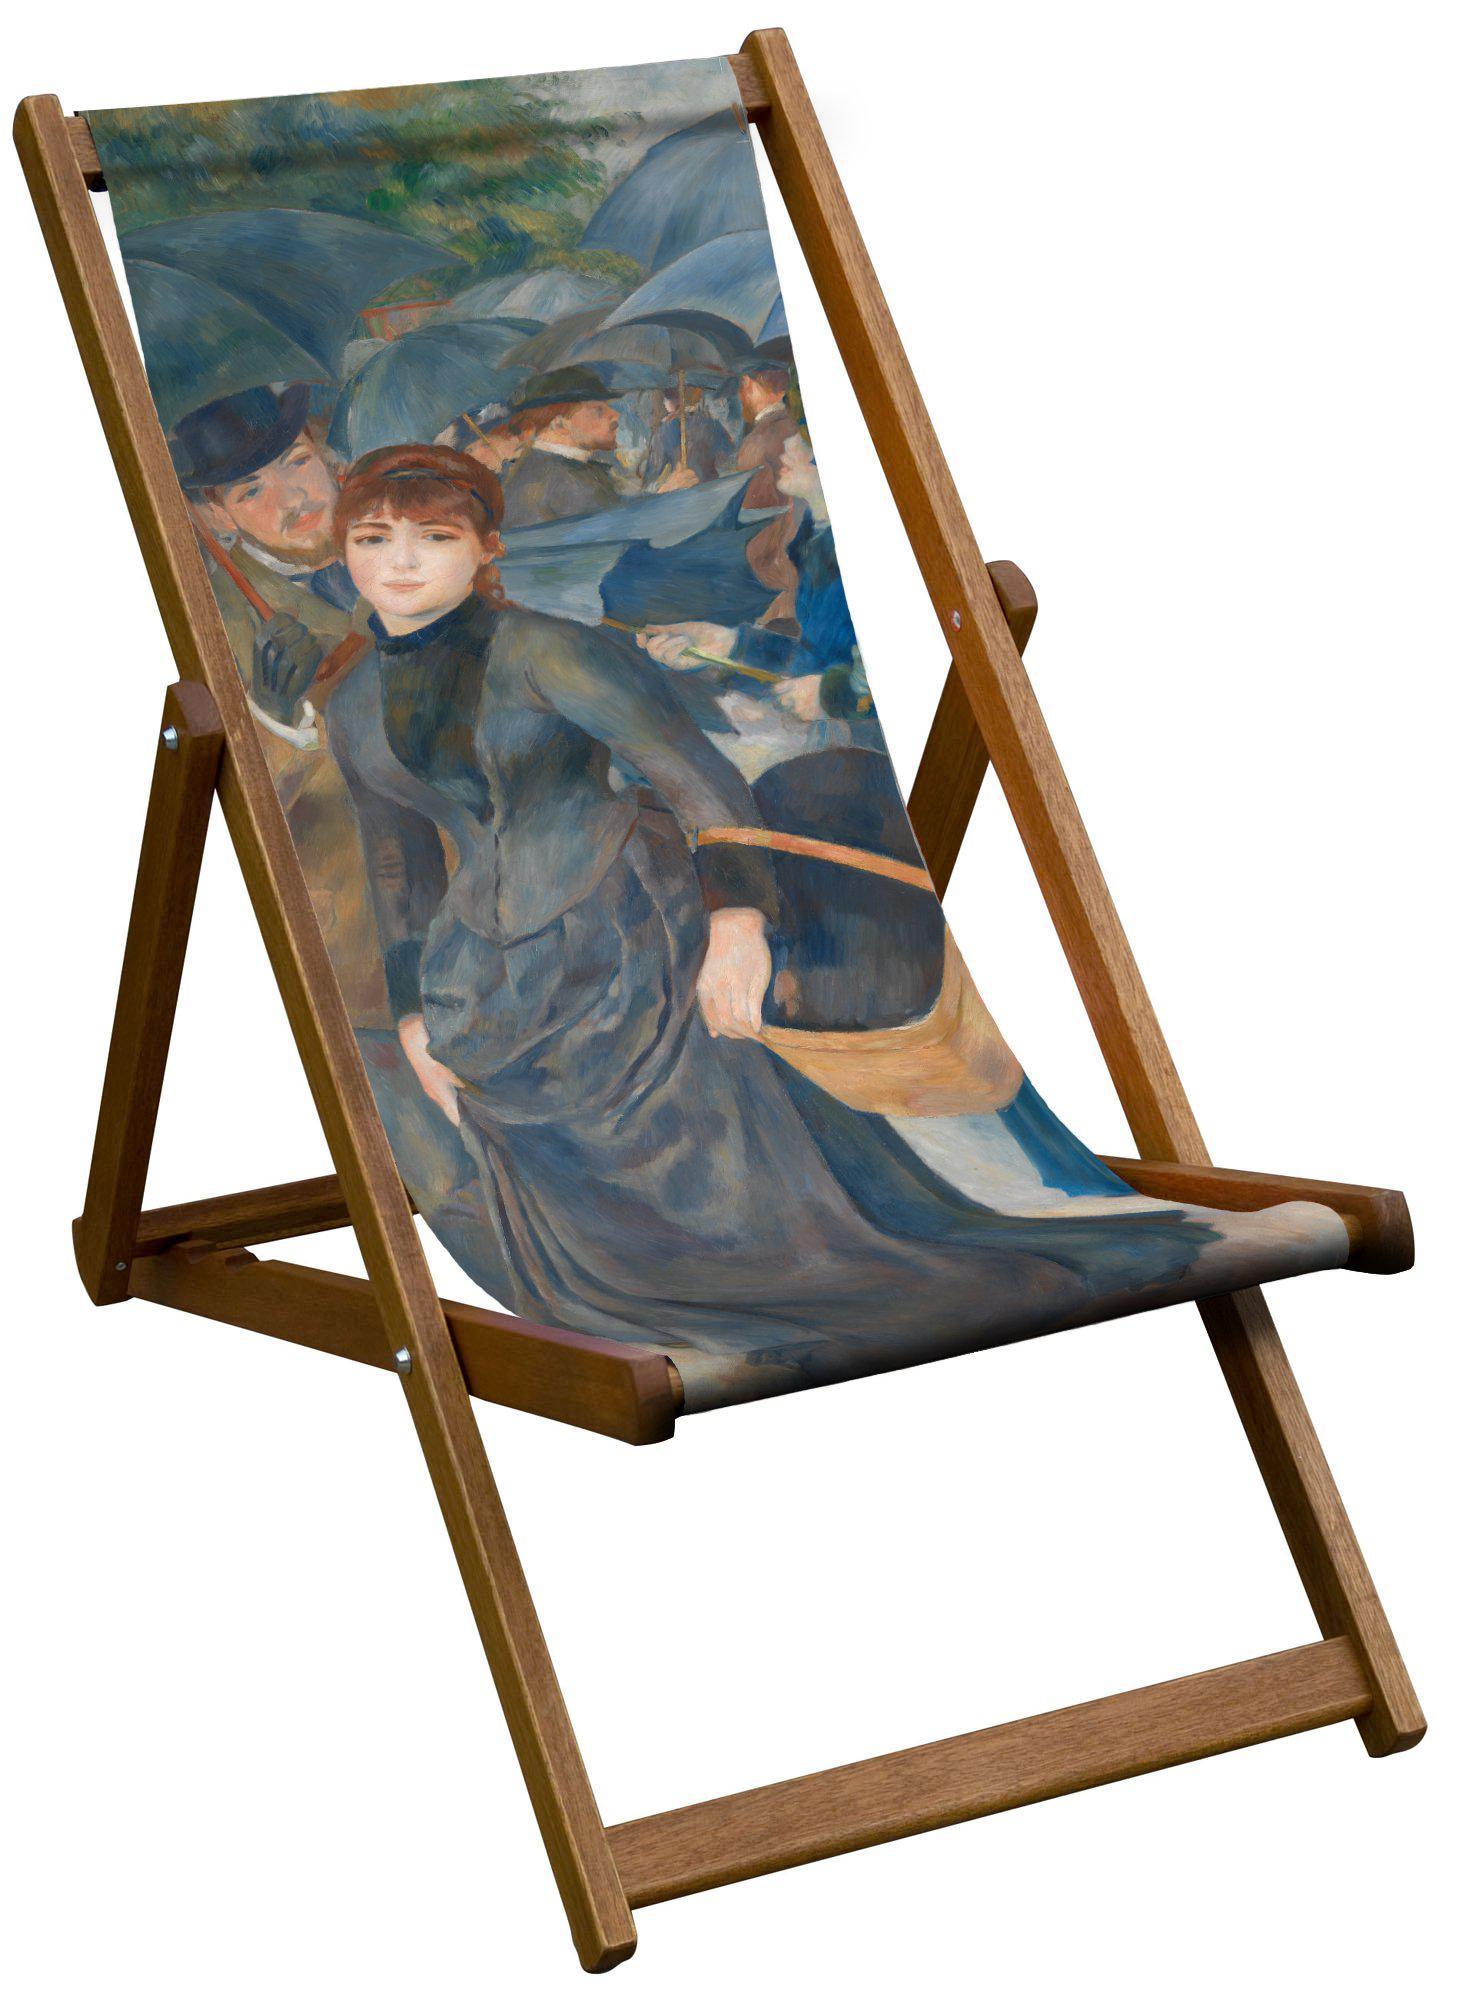 Umbrellas - Pierre-Auguste Renoir - National Gallery Deckchair